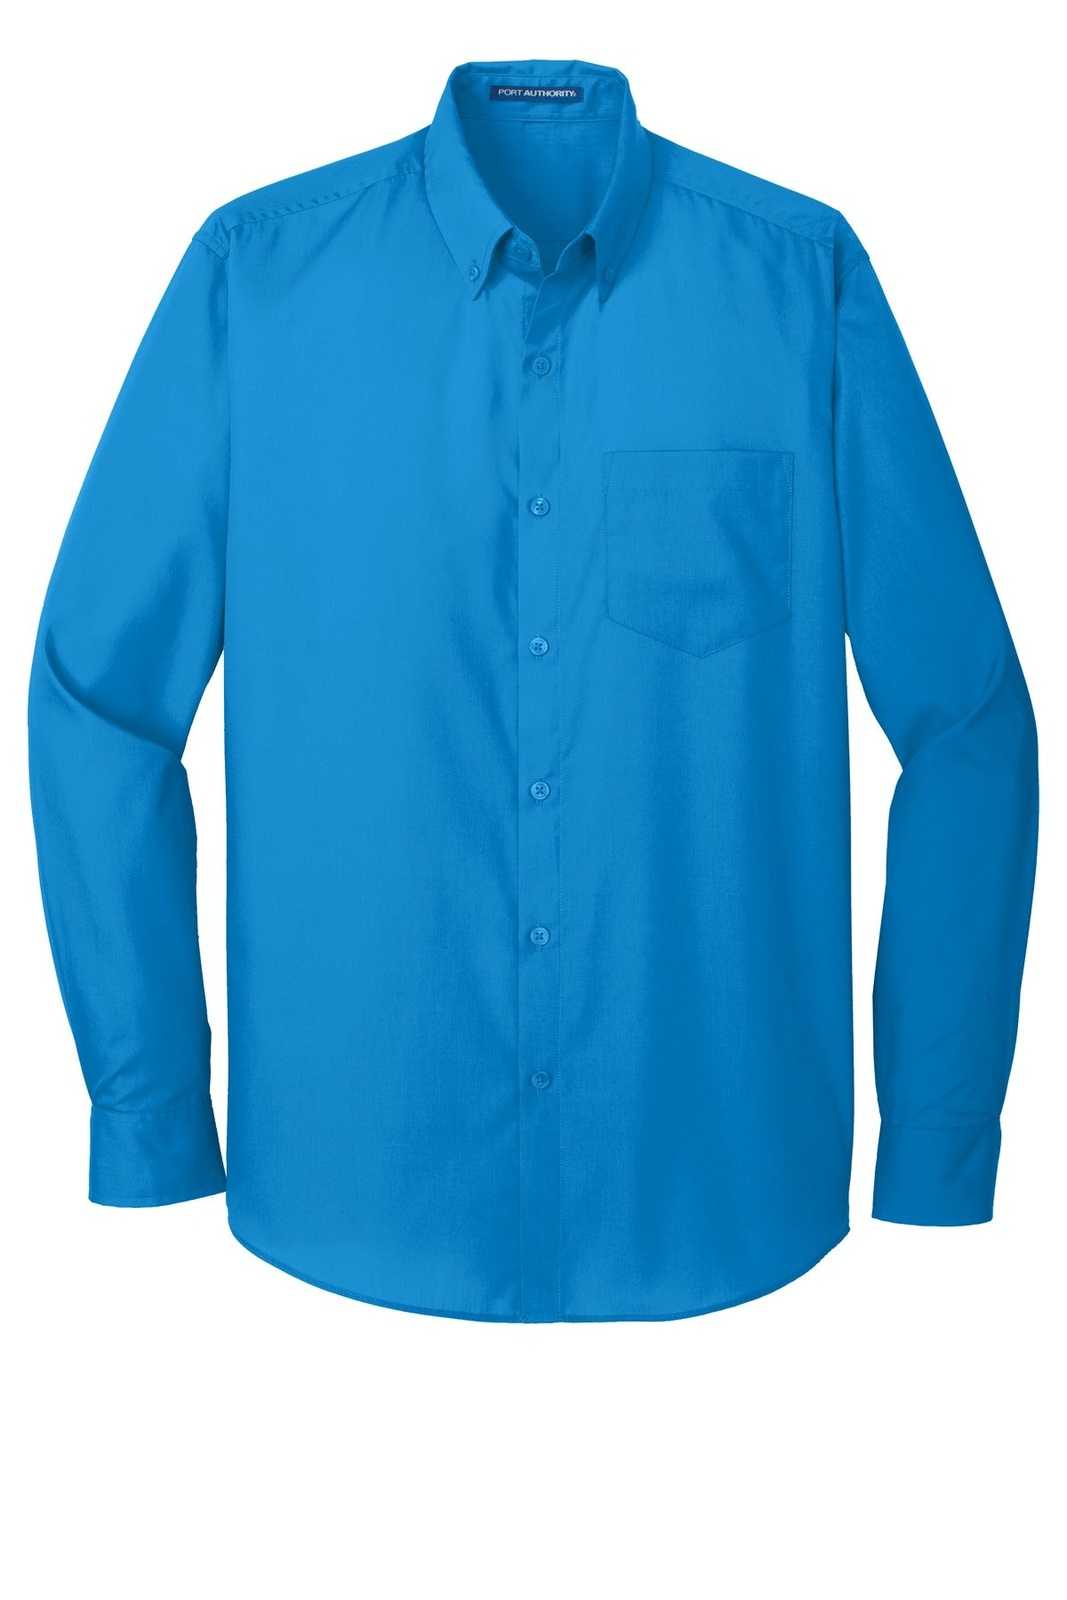 Port Authority W100 Long Sleeve Carefree Poplin Shirt - Coastal Blue - HIT a Double - 5